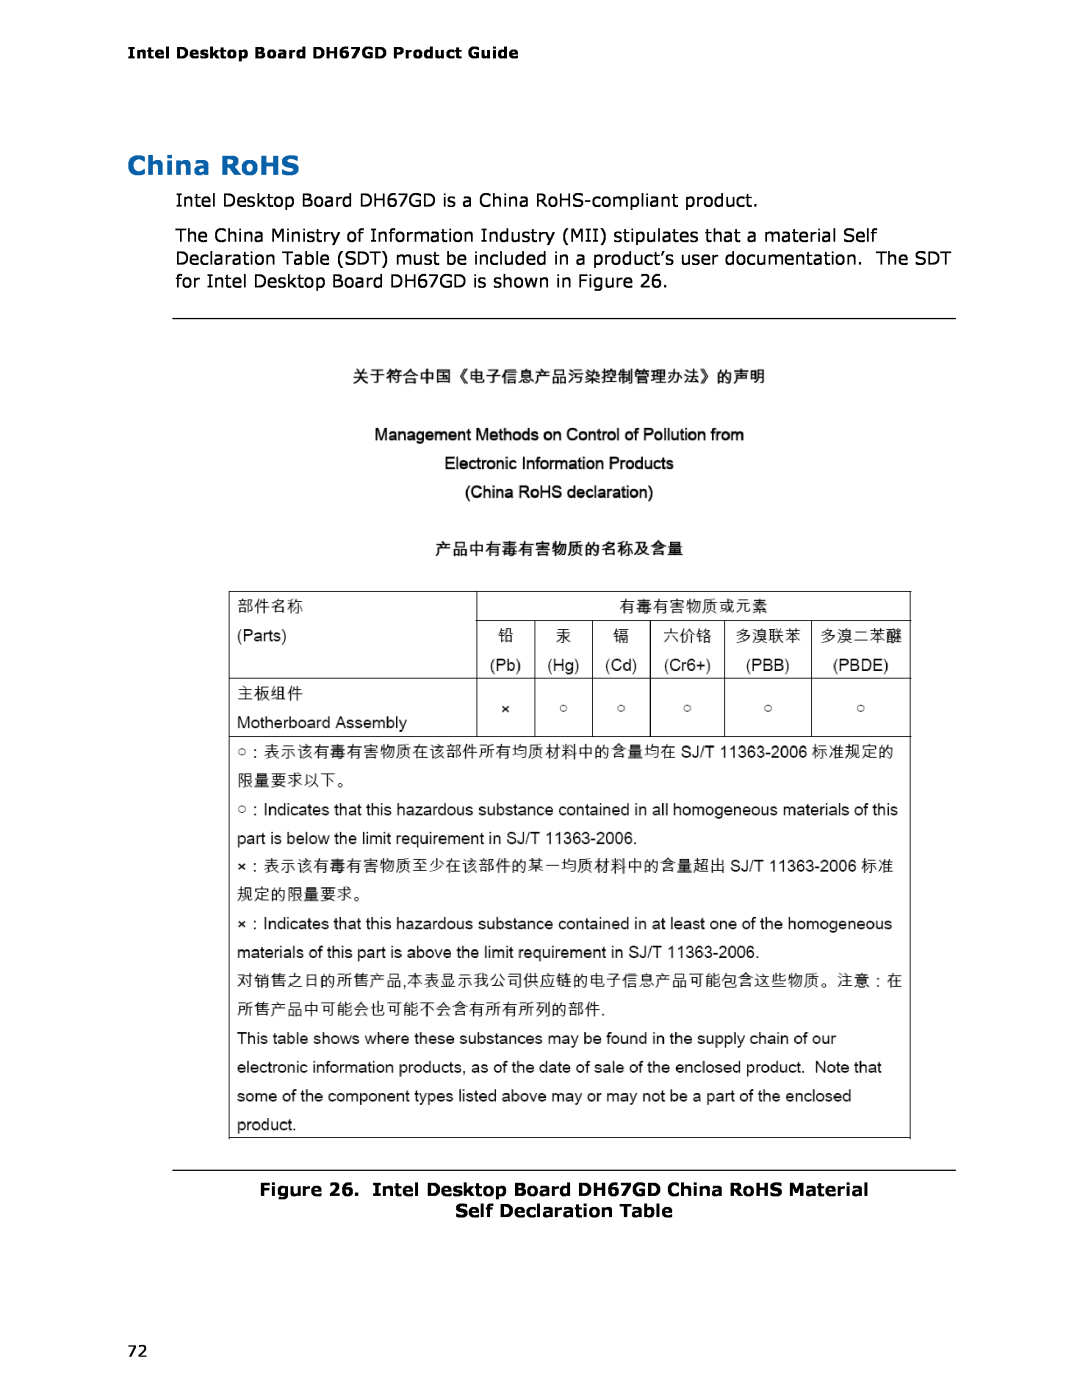 Intel BLKDH67GDB3, G13841-001 manual Intel Desktop Board DH67GD China RoHS Material, Self Declaration Table 